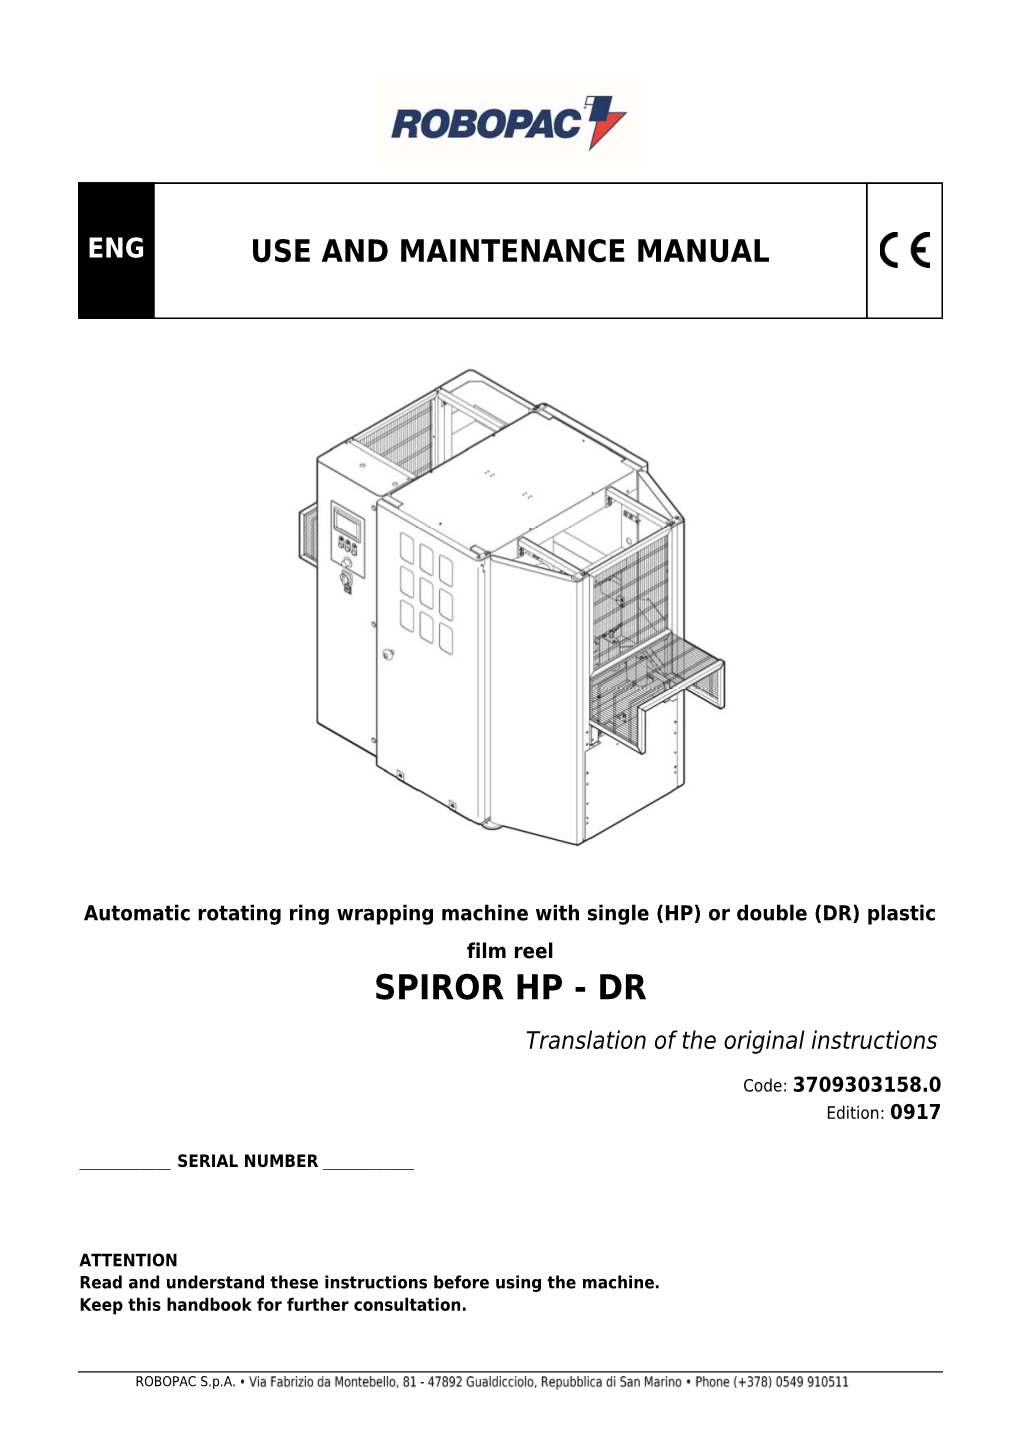 SPIROR HP - DR Translation of the Original Instructions